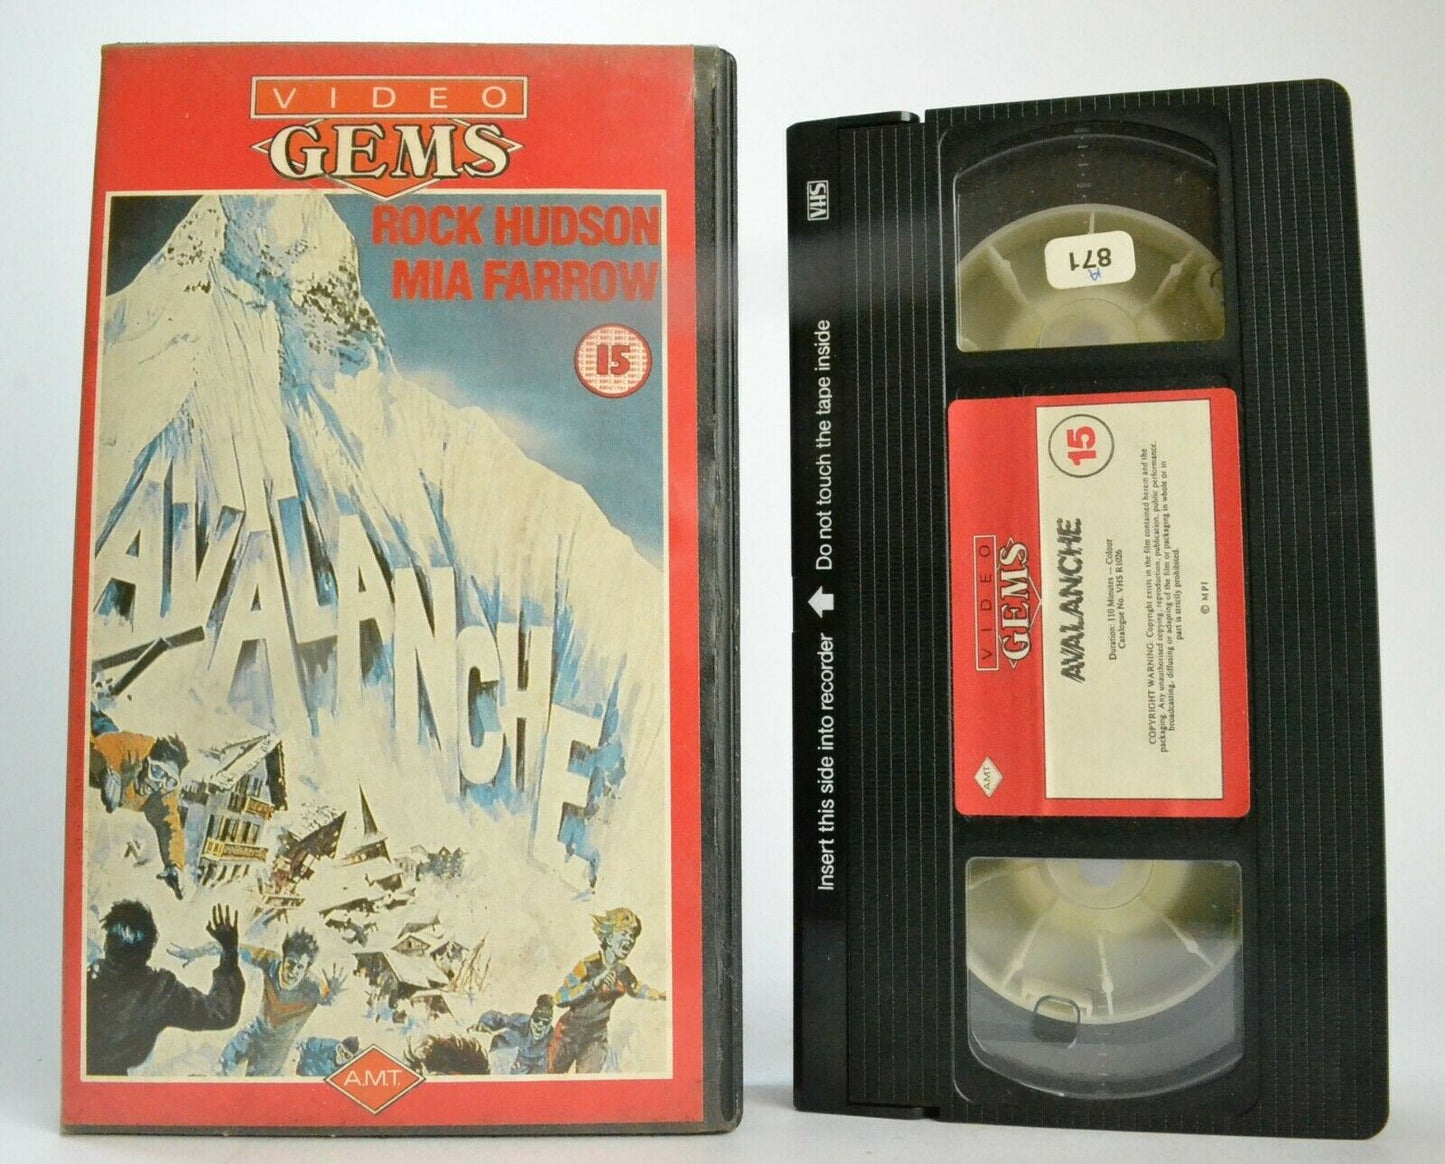 Avalanche; Psychotronic Action - Disaster Drama - Rock Hudson / Mia Farrow - VHS-